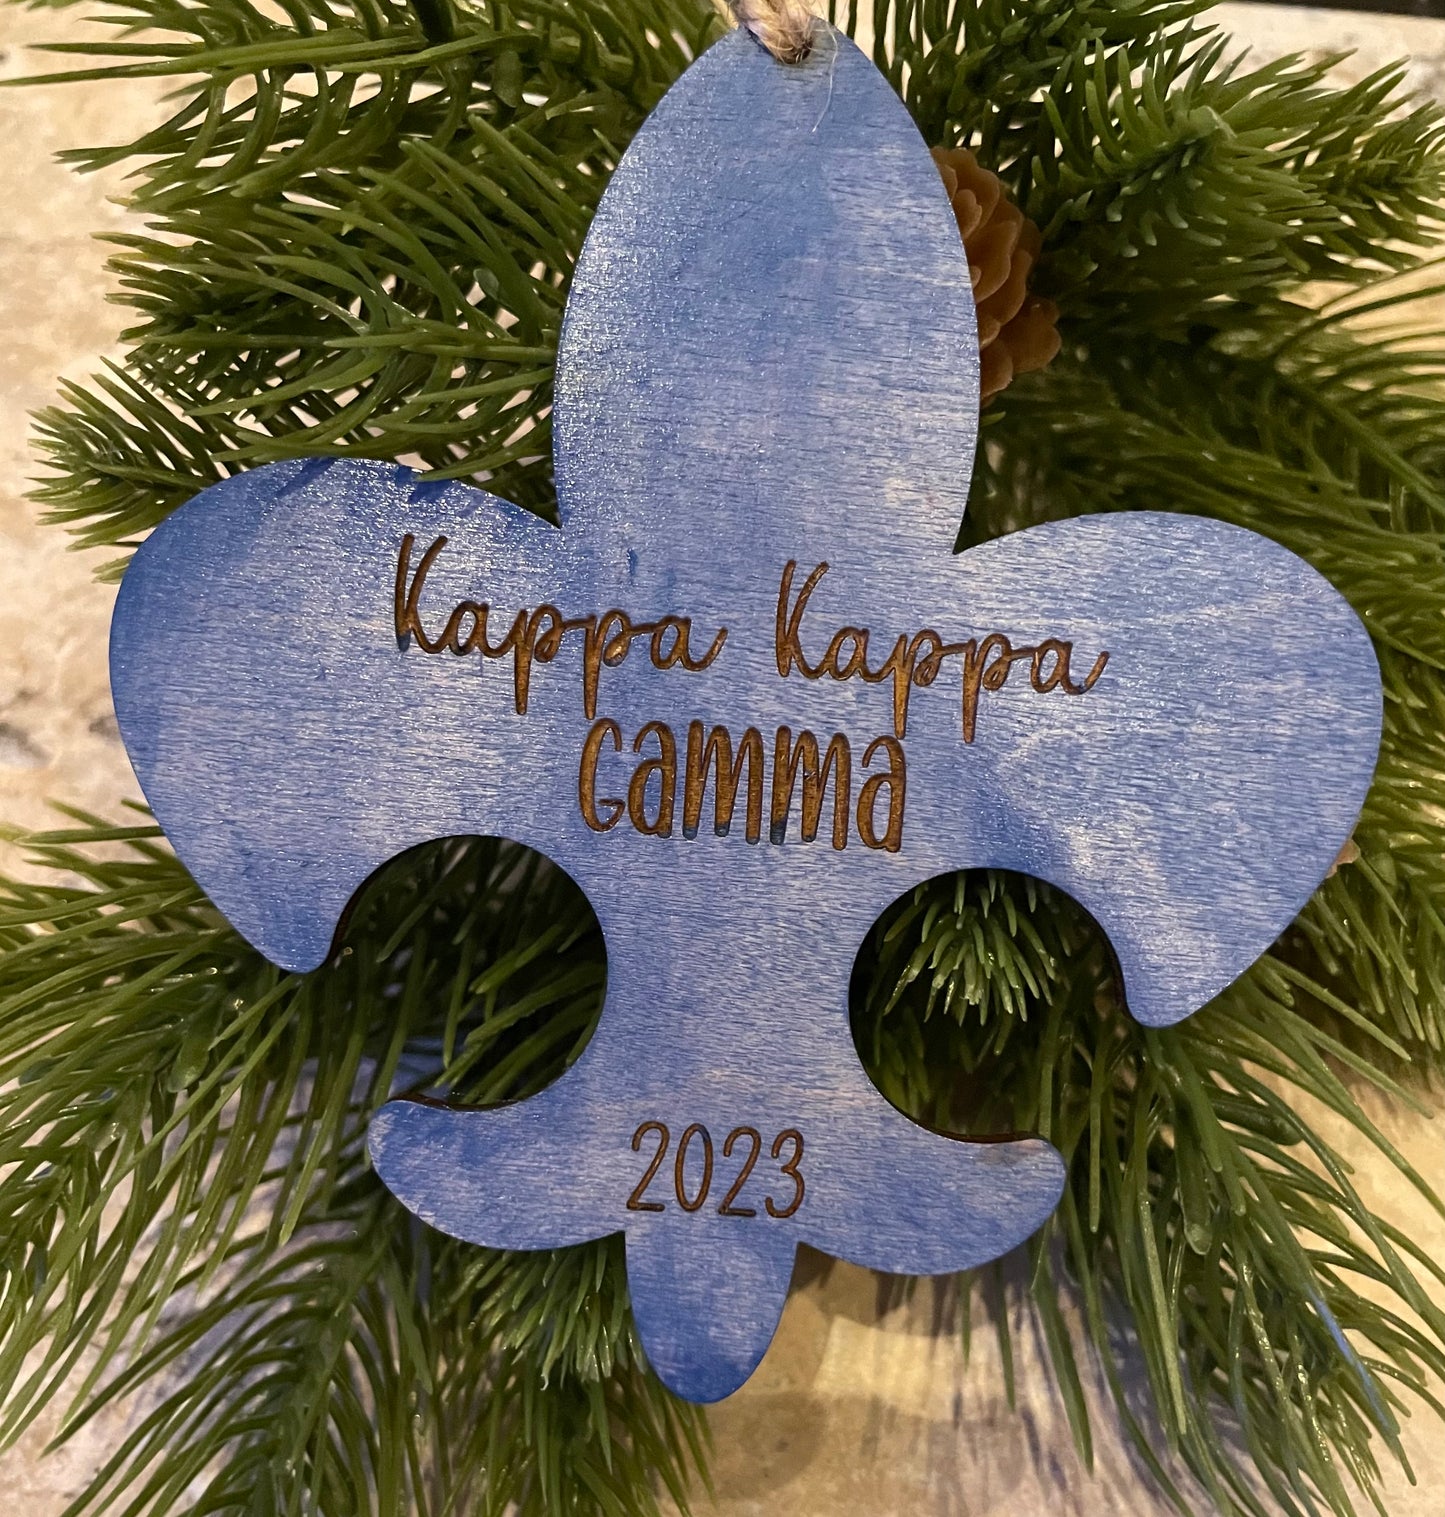 Kappa Kappa Gamma Fluer-de-lis Ornament